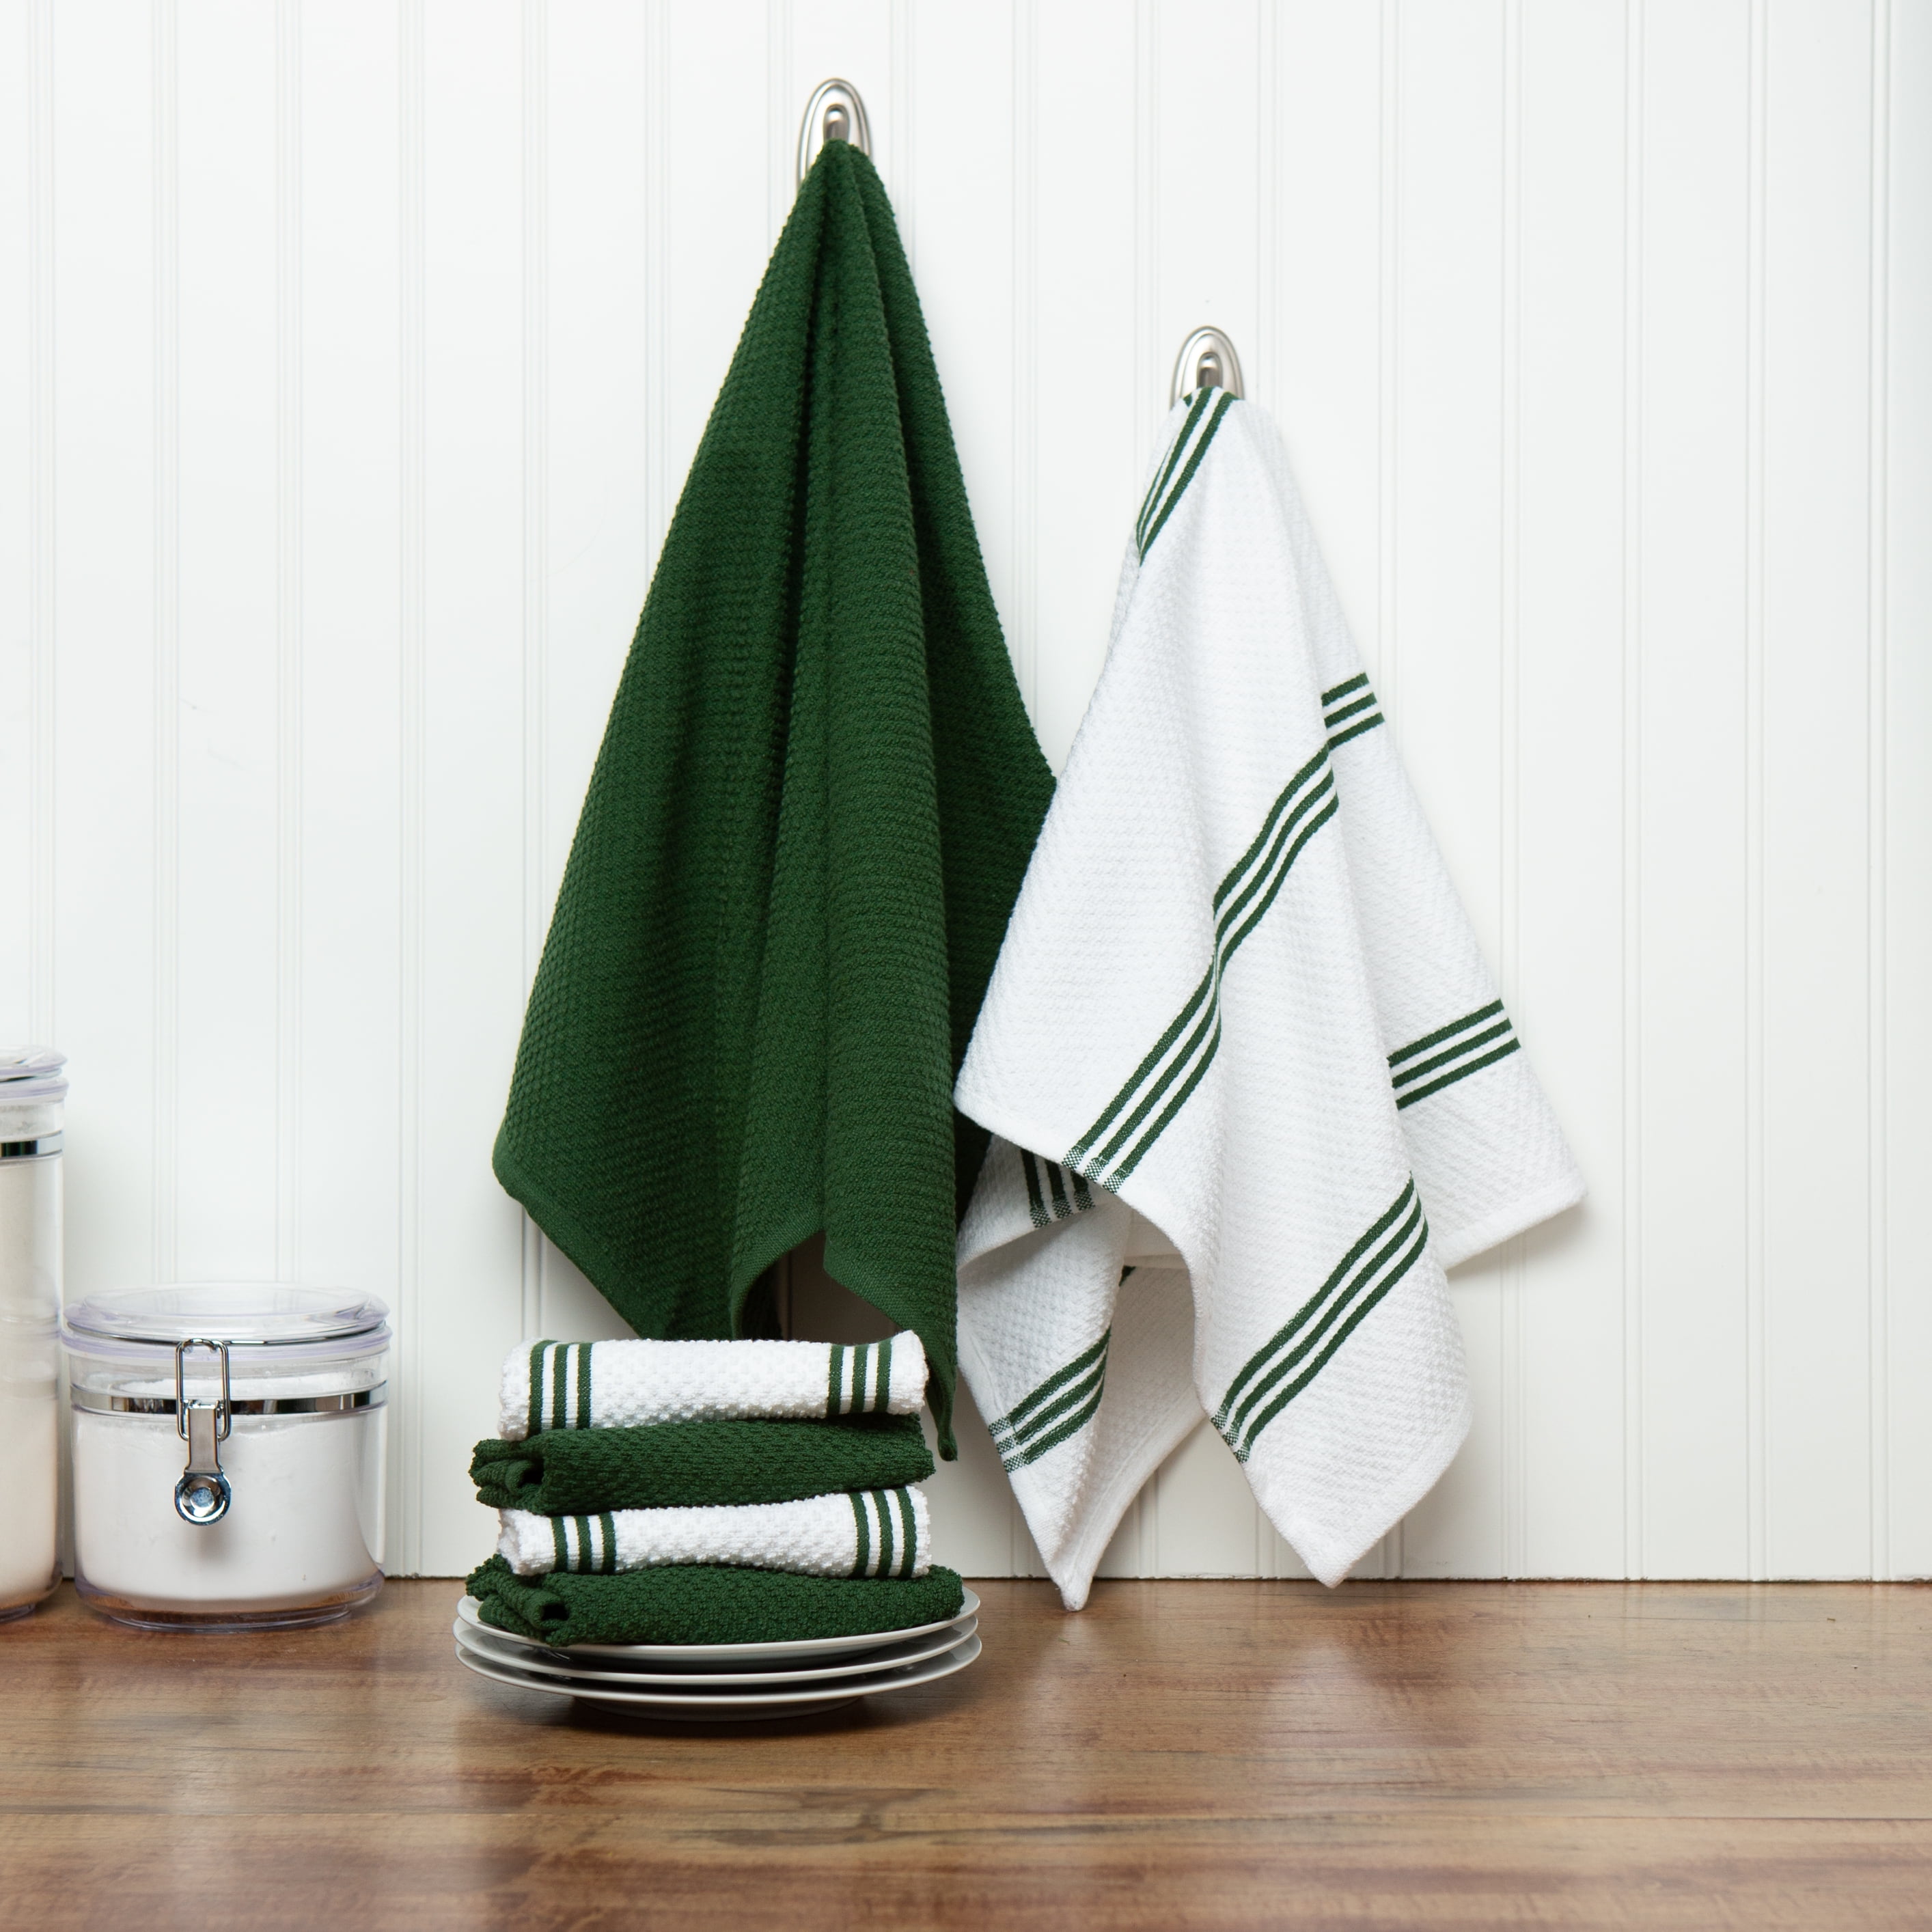 Ambrosia 6 Piece Set | 2 Kitchen Towels 2 Dish Cloths 2 Pot Holders Hunter Green, Size: 6 Piece Towel|Dish Cloth|Pot Holder